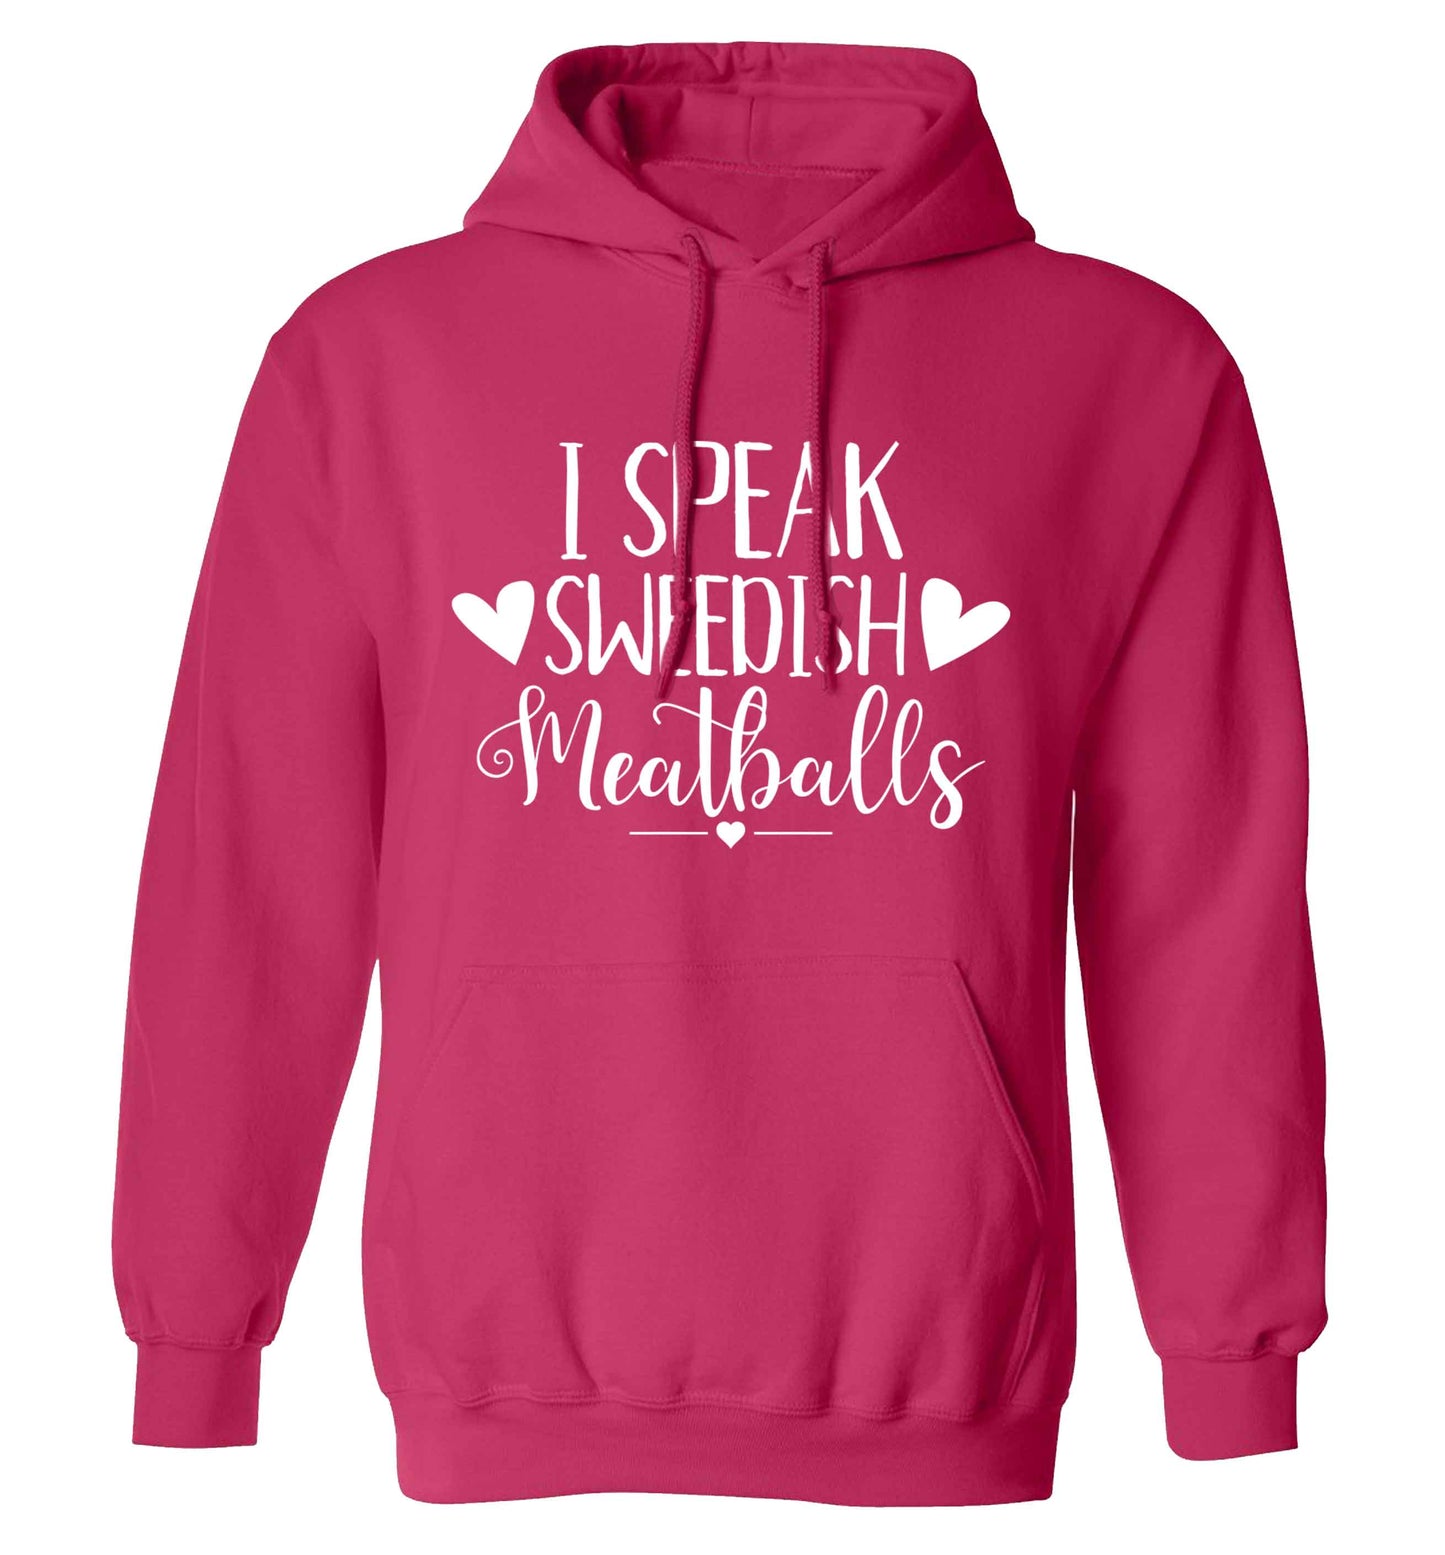 I speak sweedish...meatballs adults unisex pink hoodie 2XL